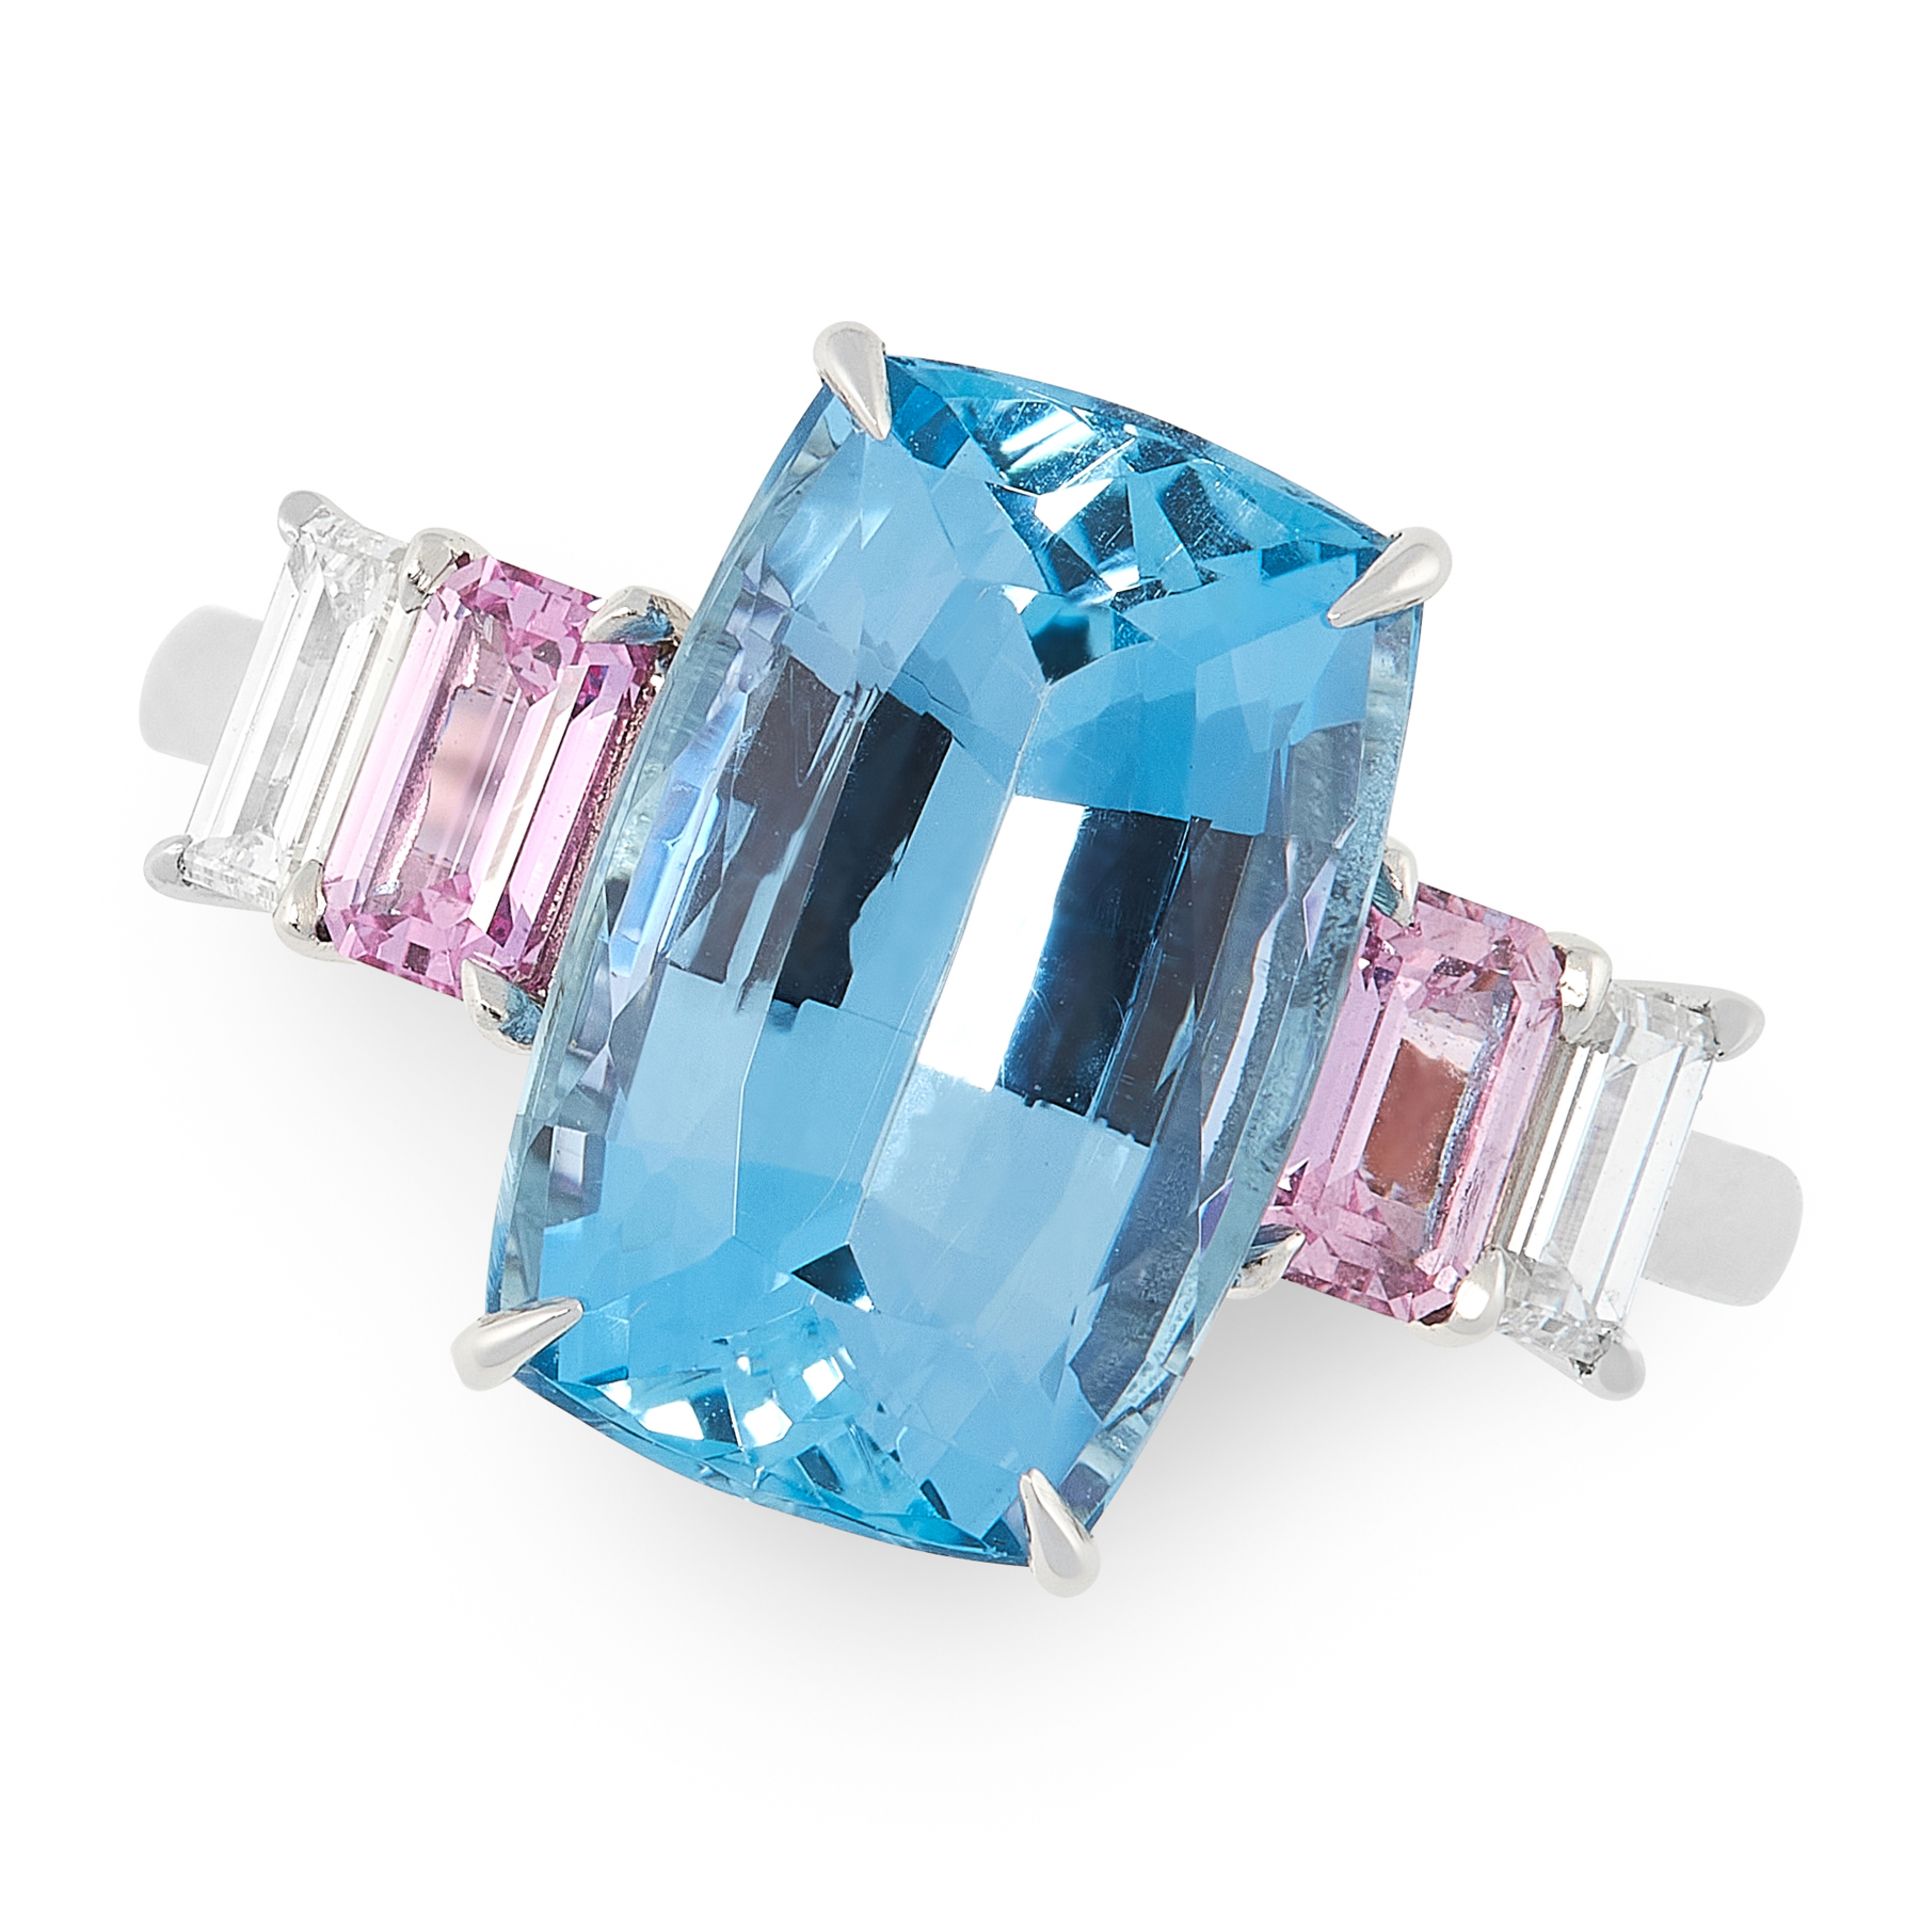 AN AQUAMARINE, PINK SAPPHIRE AND DIAMOND RING set with a cushion cut aquamarine of 4.93 carats